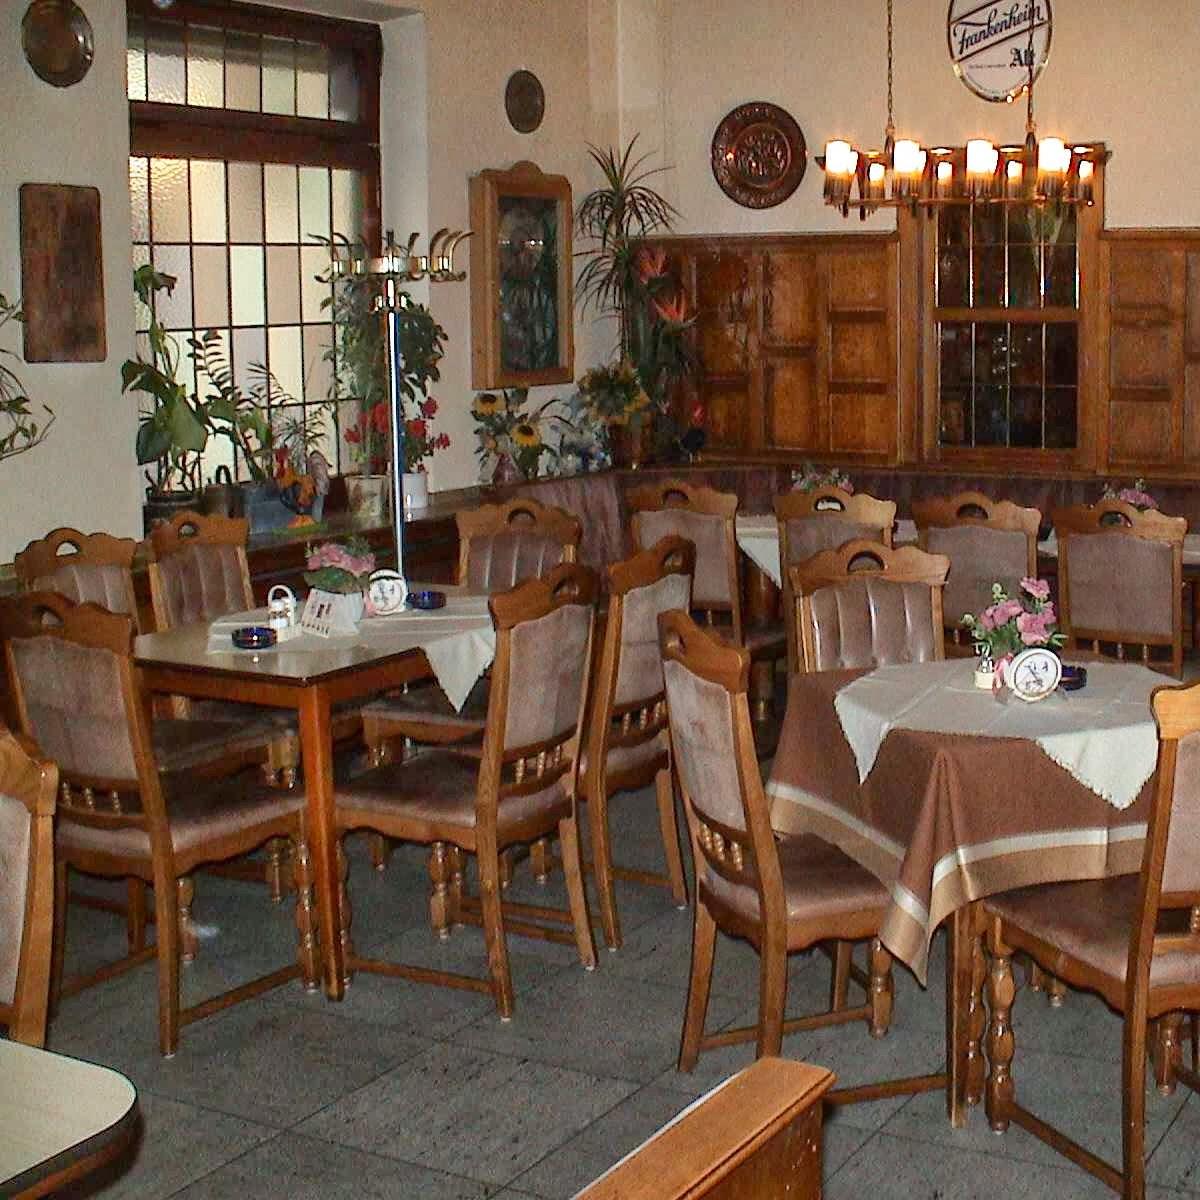 Restaurant "Gaststätte Em Hahnekörfke" in Neuss